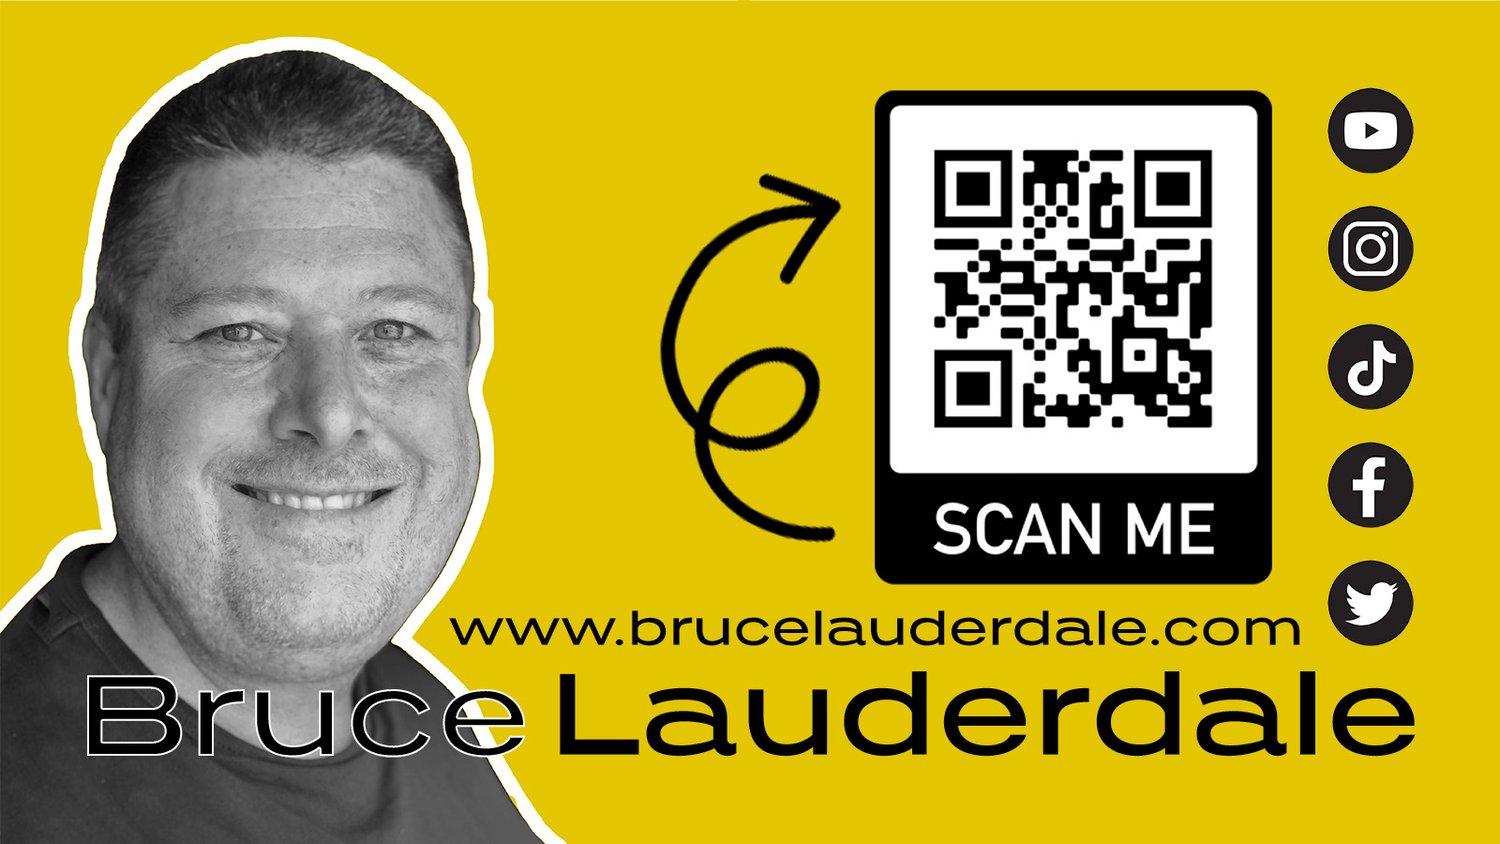 www.brucelauderdale.com